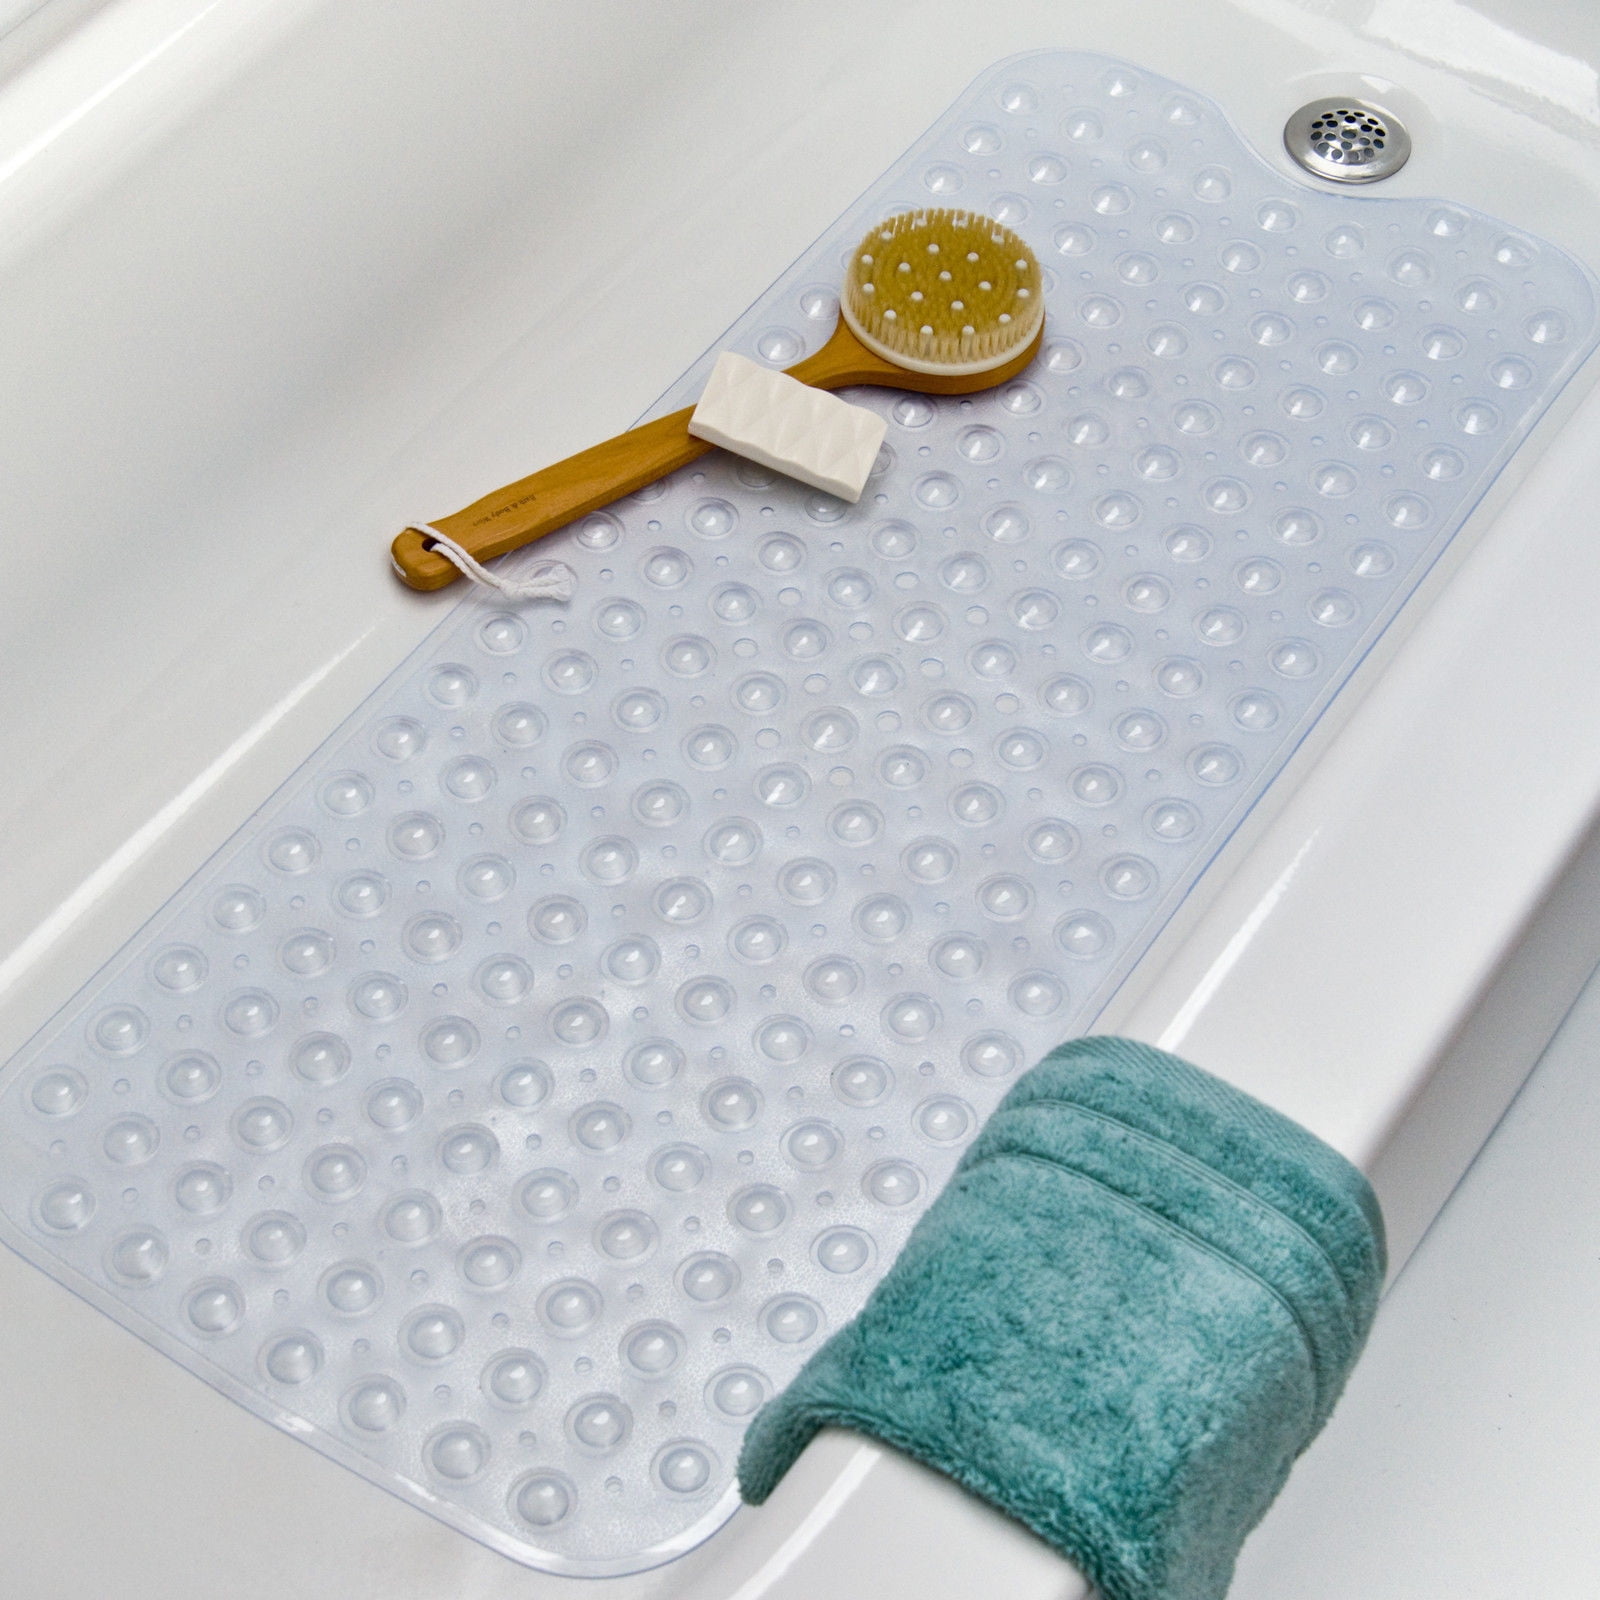 Safe Bathroom Product PVC Bathtub Cushion Non Slip Pad Bath Mat Shower Rug